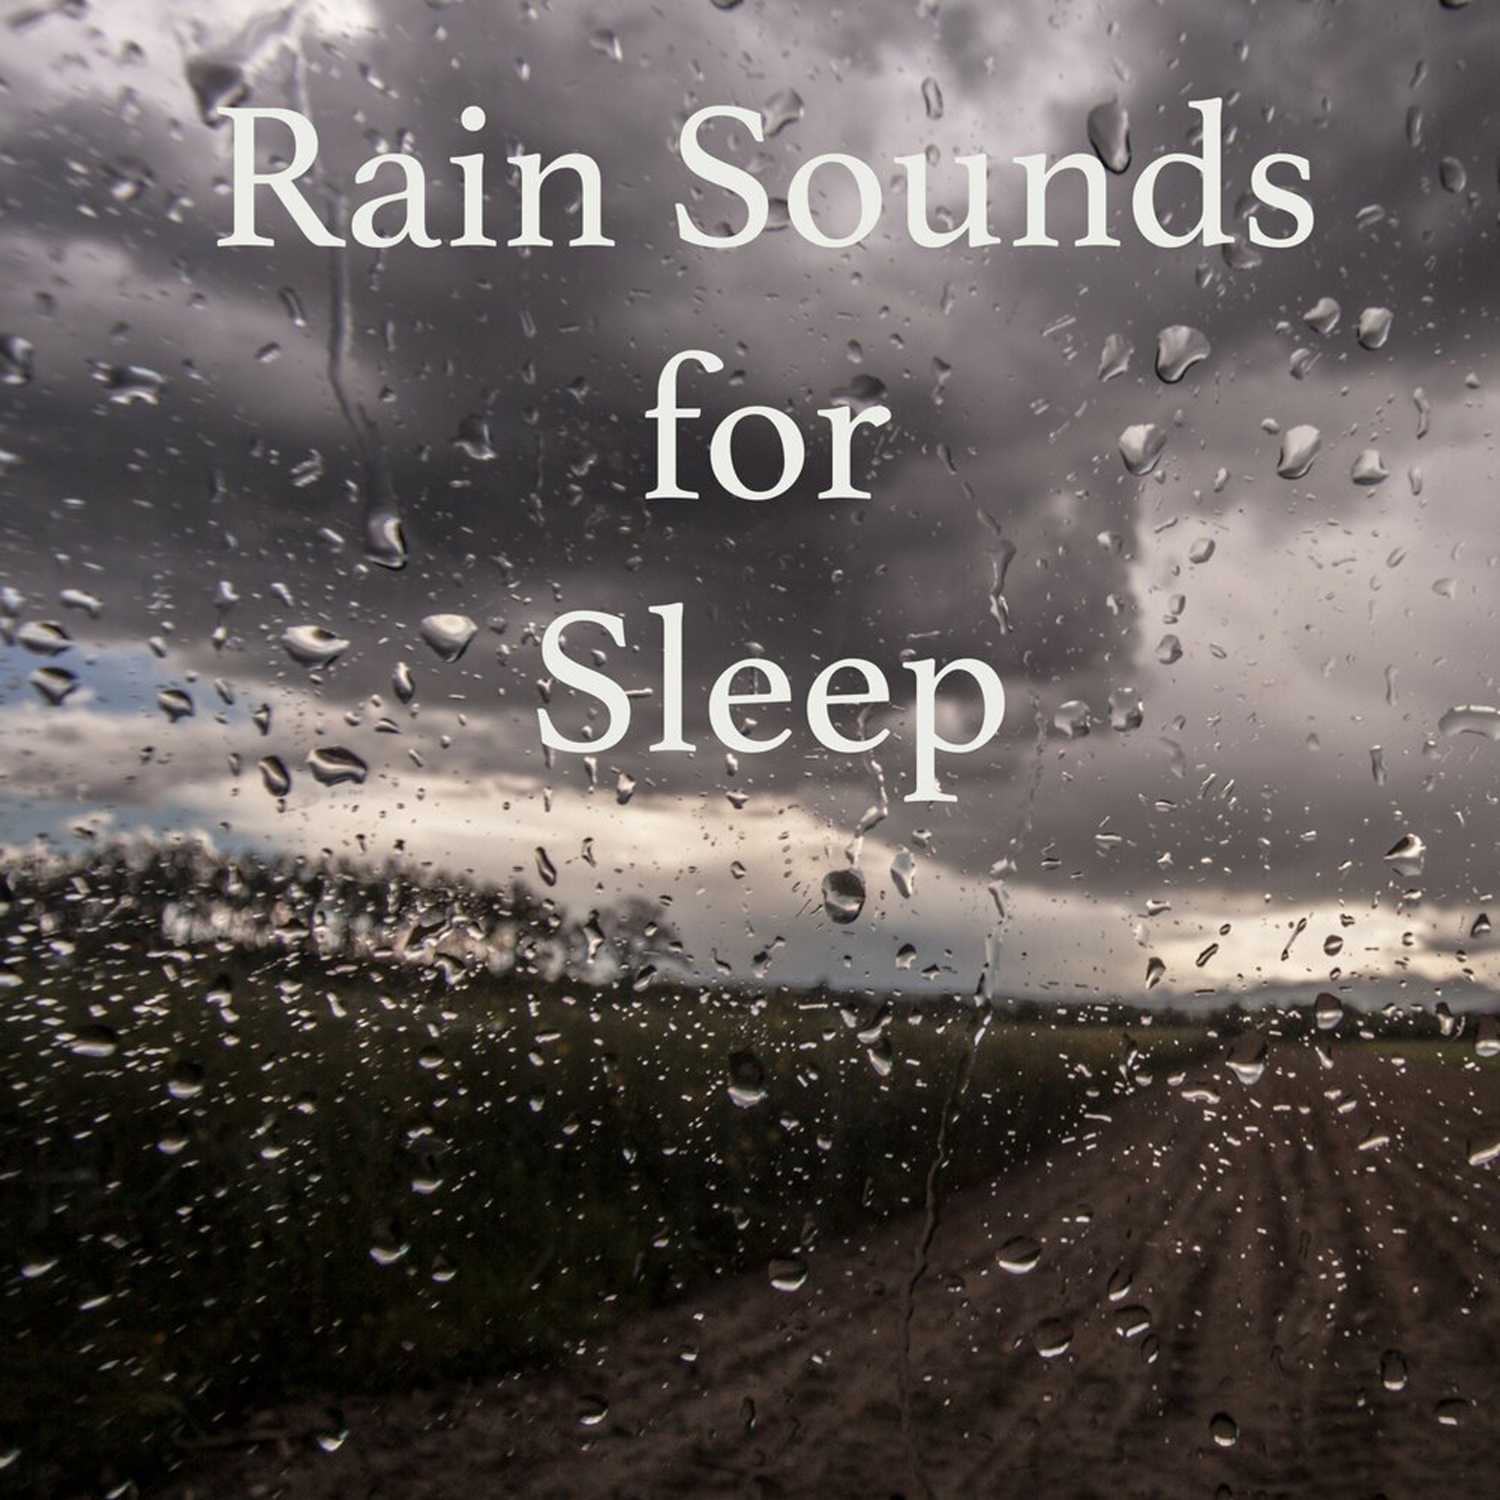 Rain Sounds Sleep: Nighttime Rain Sounds for Relaxing, Meditation, Yoga, Sleeping, Nature Sounds, Water Sounds - Loopable